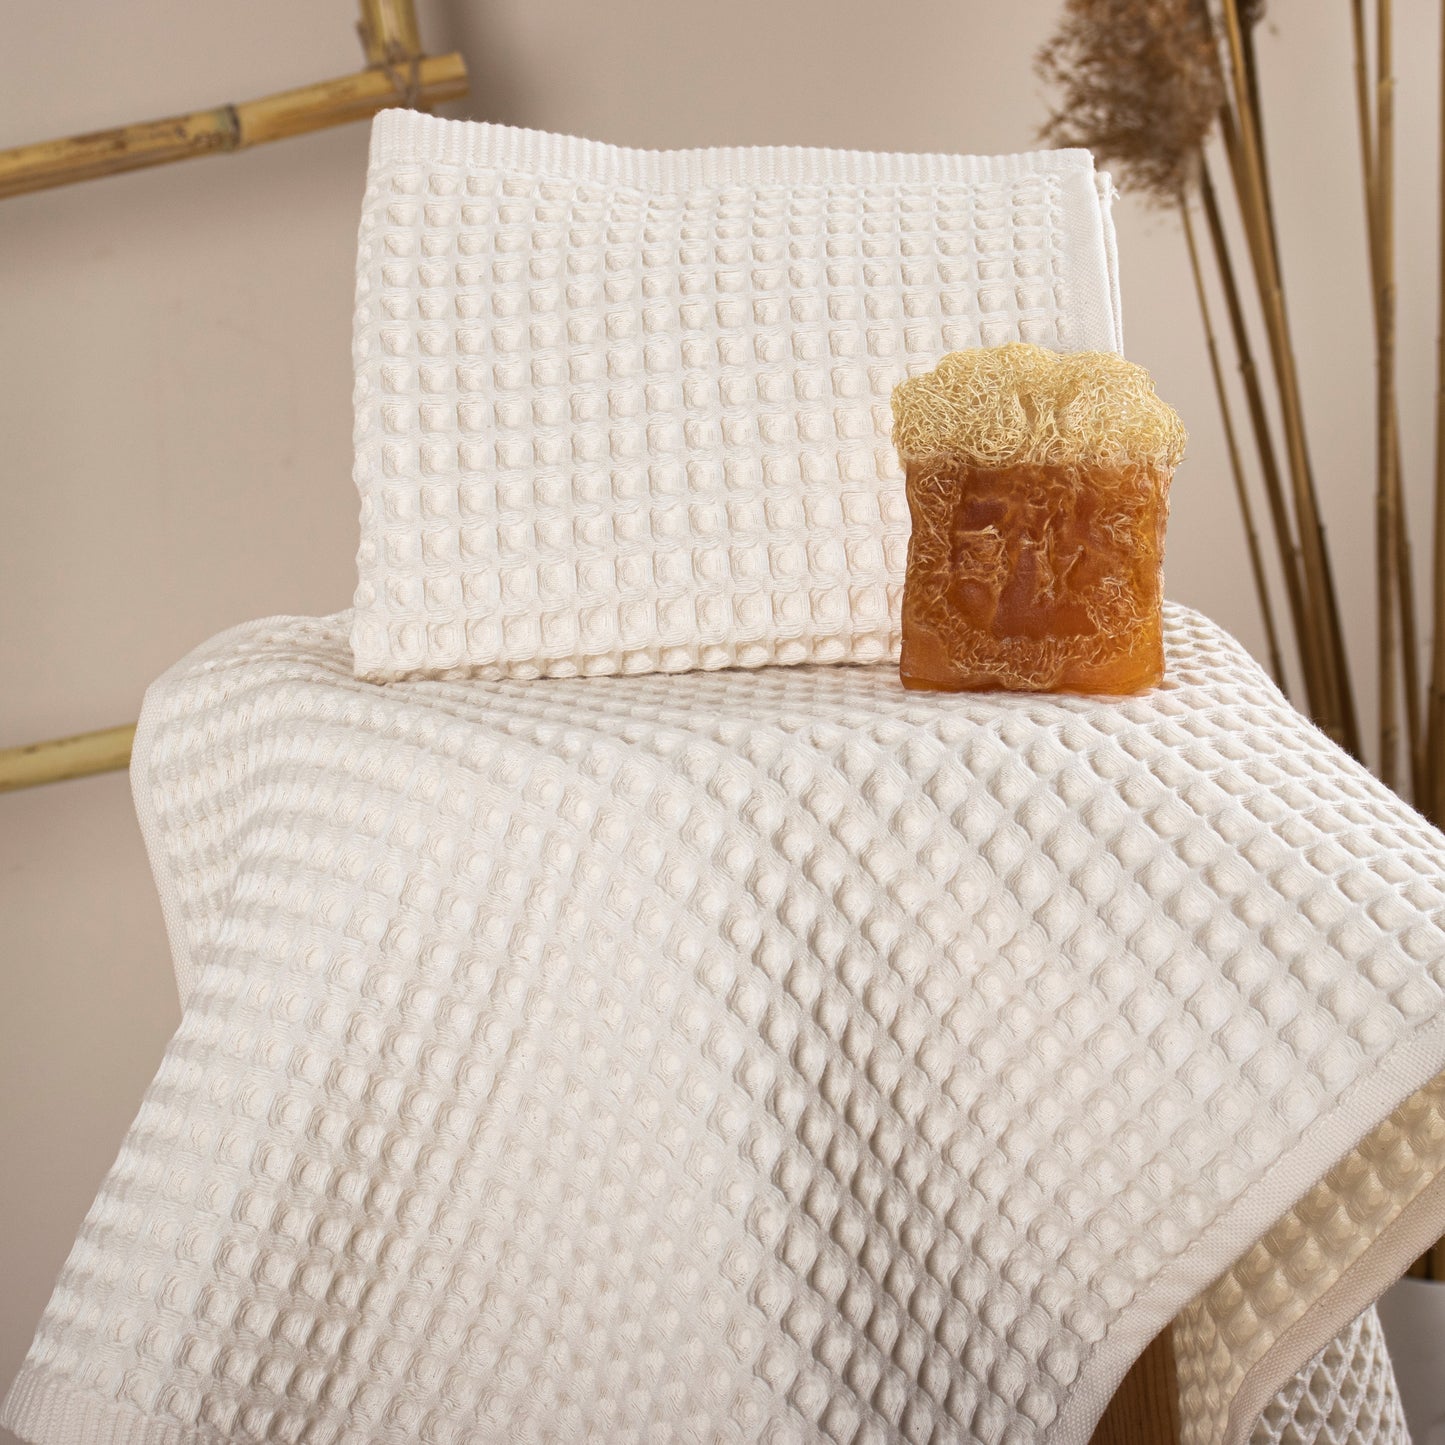 Honeycomb Towel - Waffle Towel - Kitchen and Hand Towel - Beige